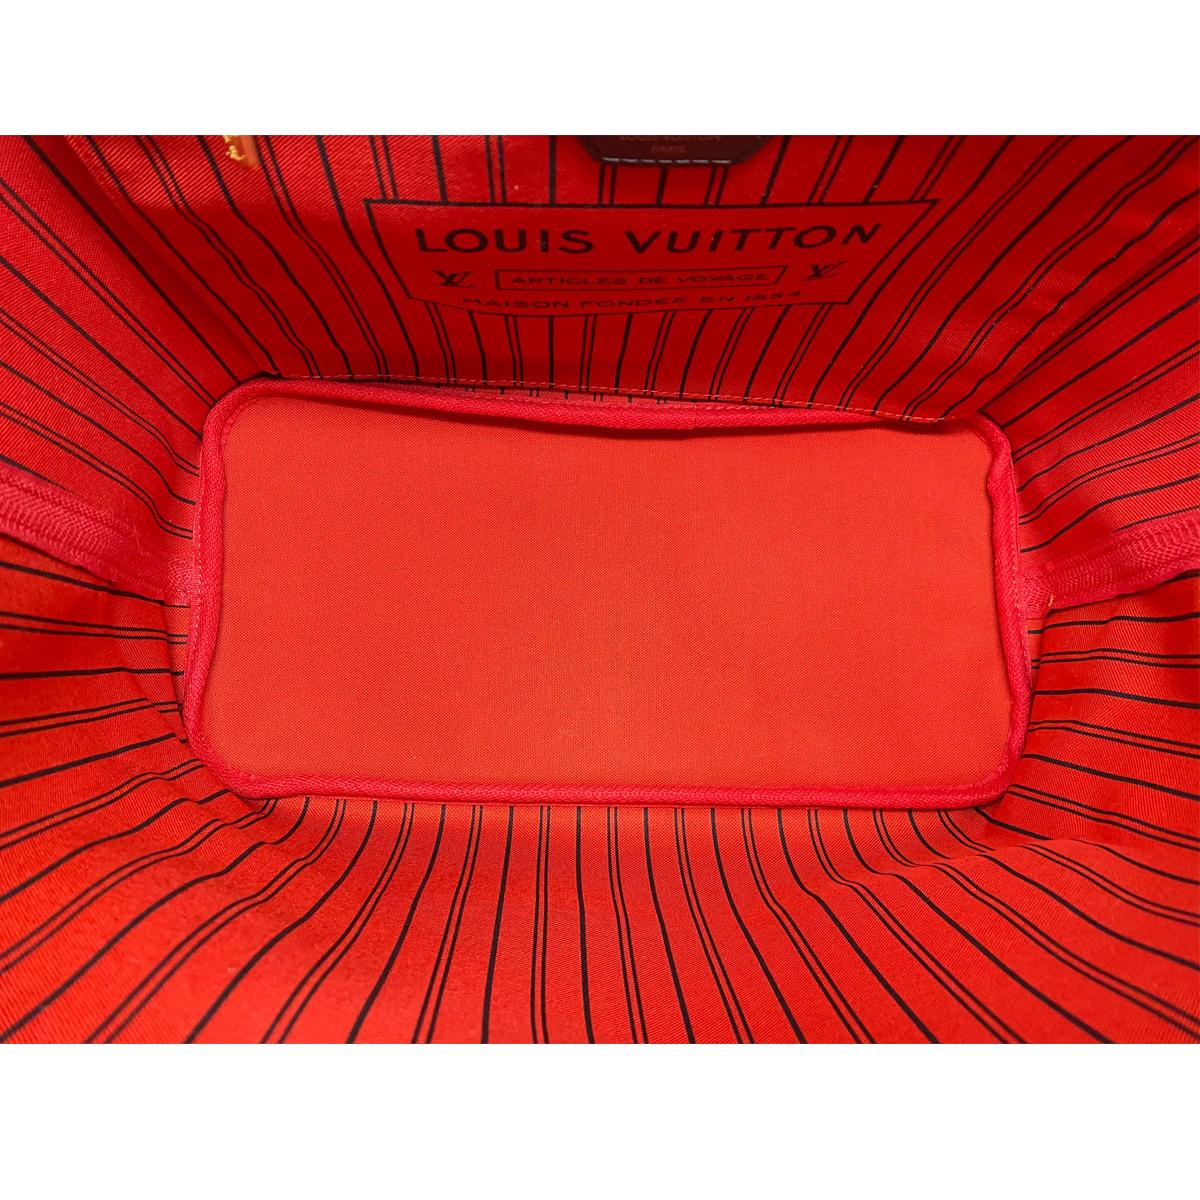 Black Louis Vuitton Neverfull MM Cherry Damier Ebene Leather Canvas Tote Handbag